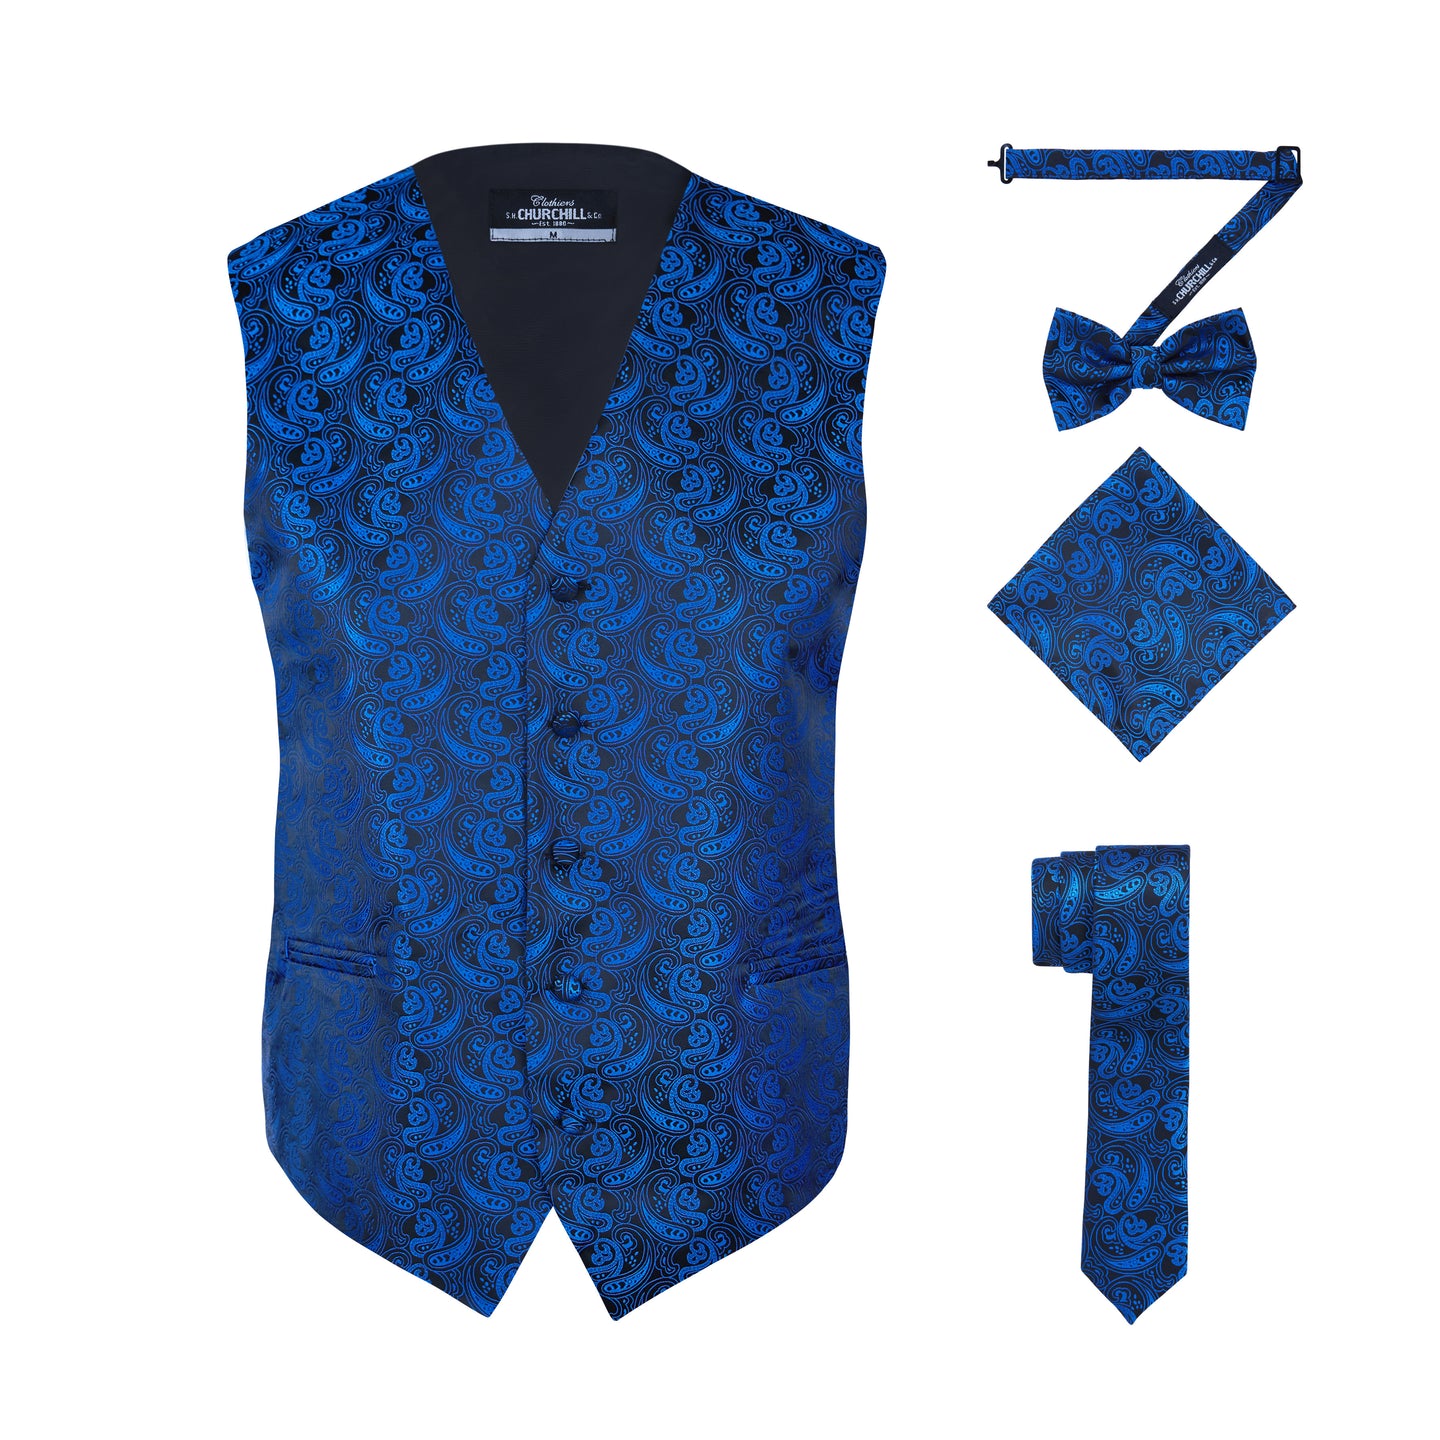 S.H. Churchill & Co. Men's Blue/Black Paisley Vest Set, with Bow Tie, Neck Tie and Pocket Hanky